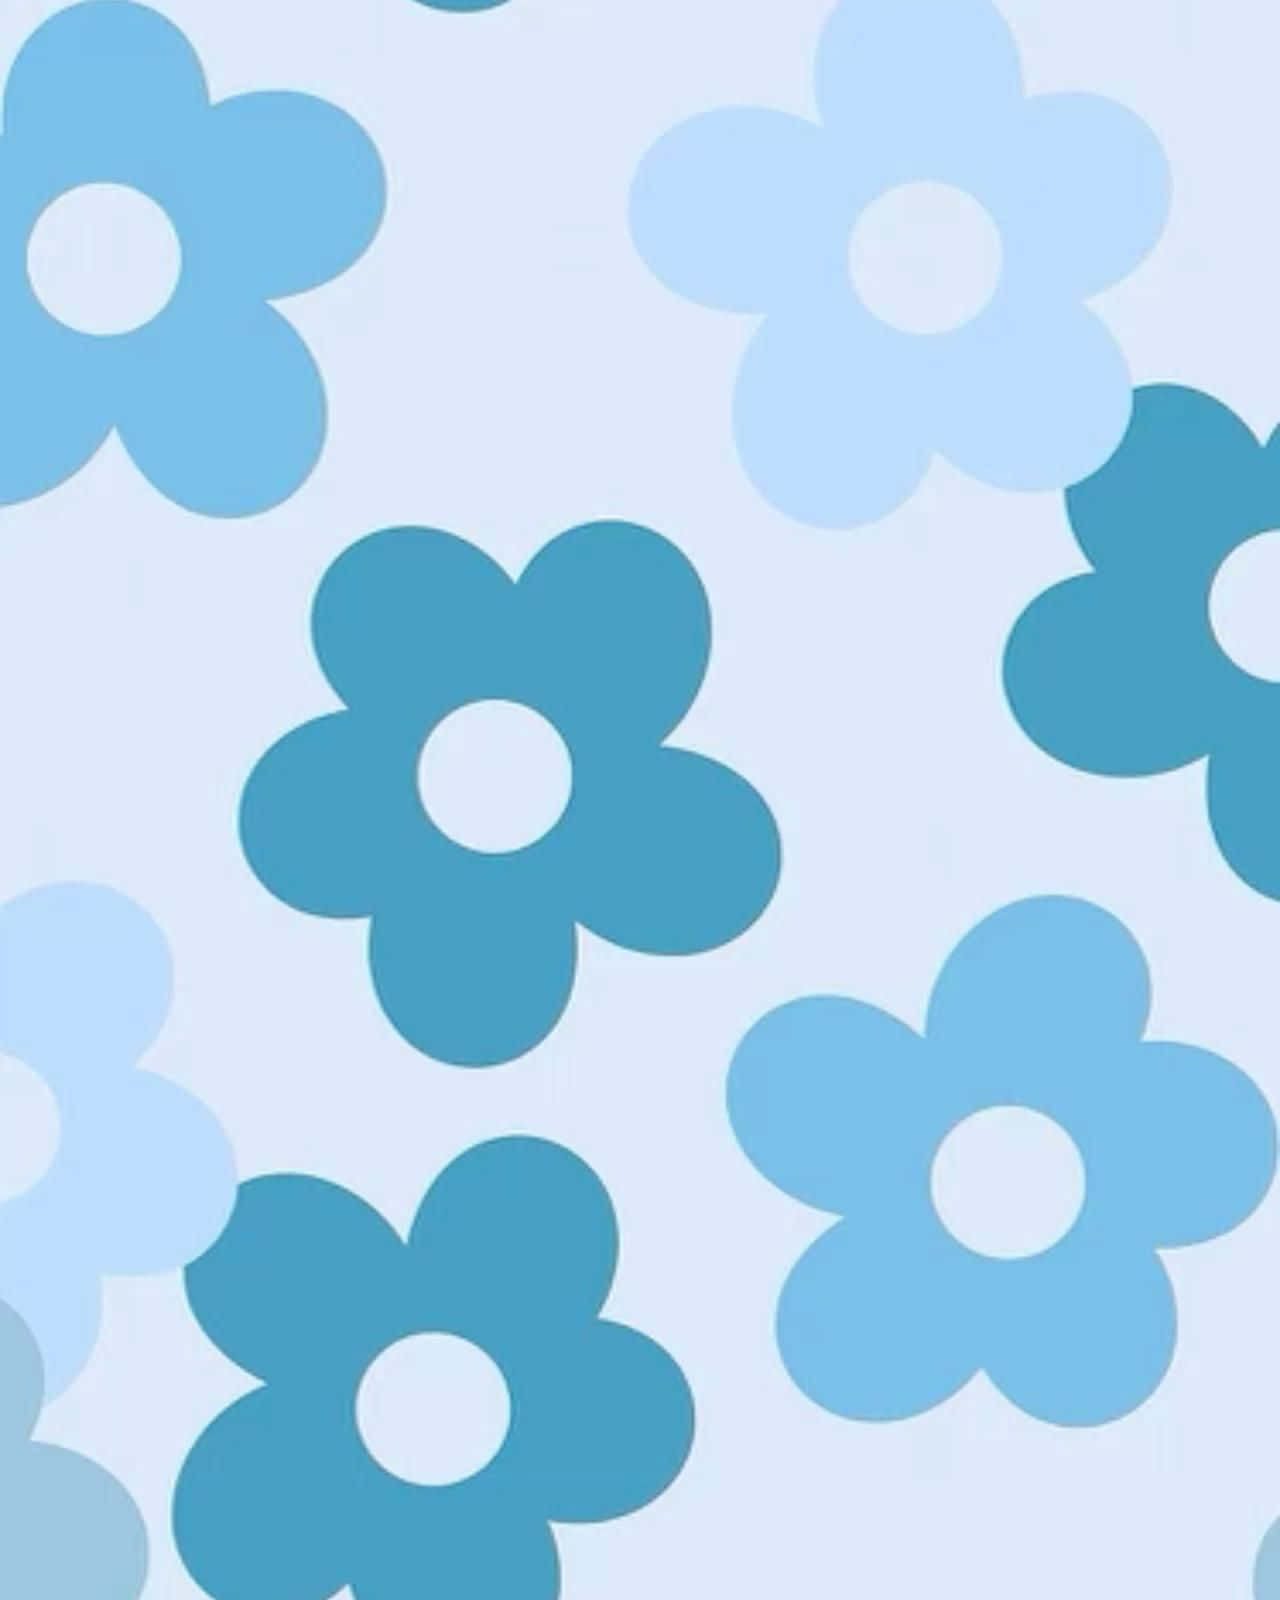 Blue Floral Pattern Background Wallpaper